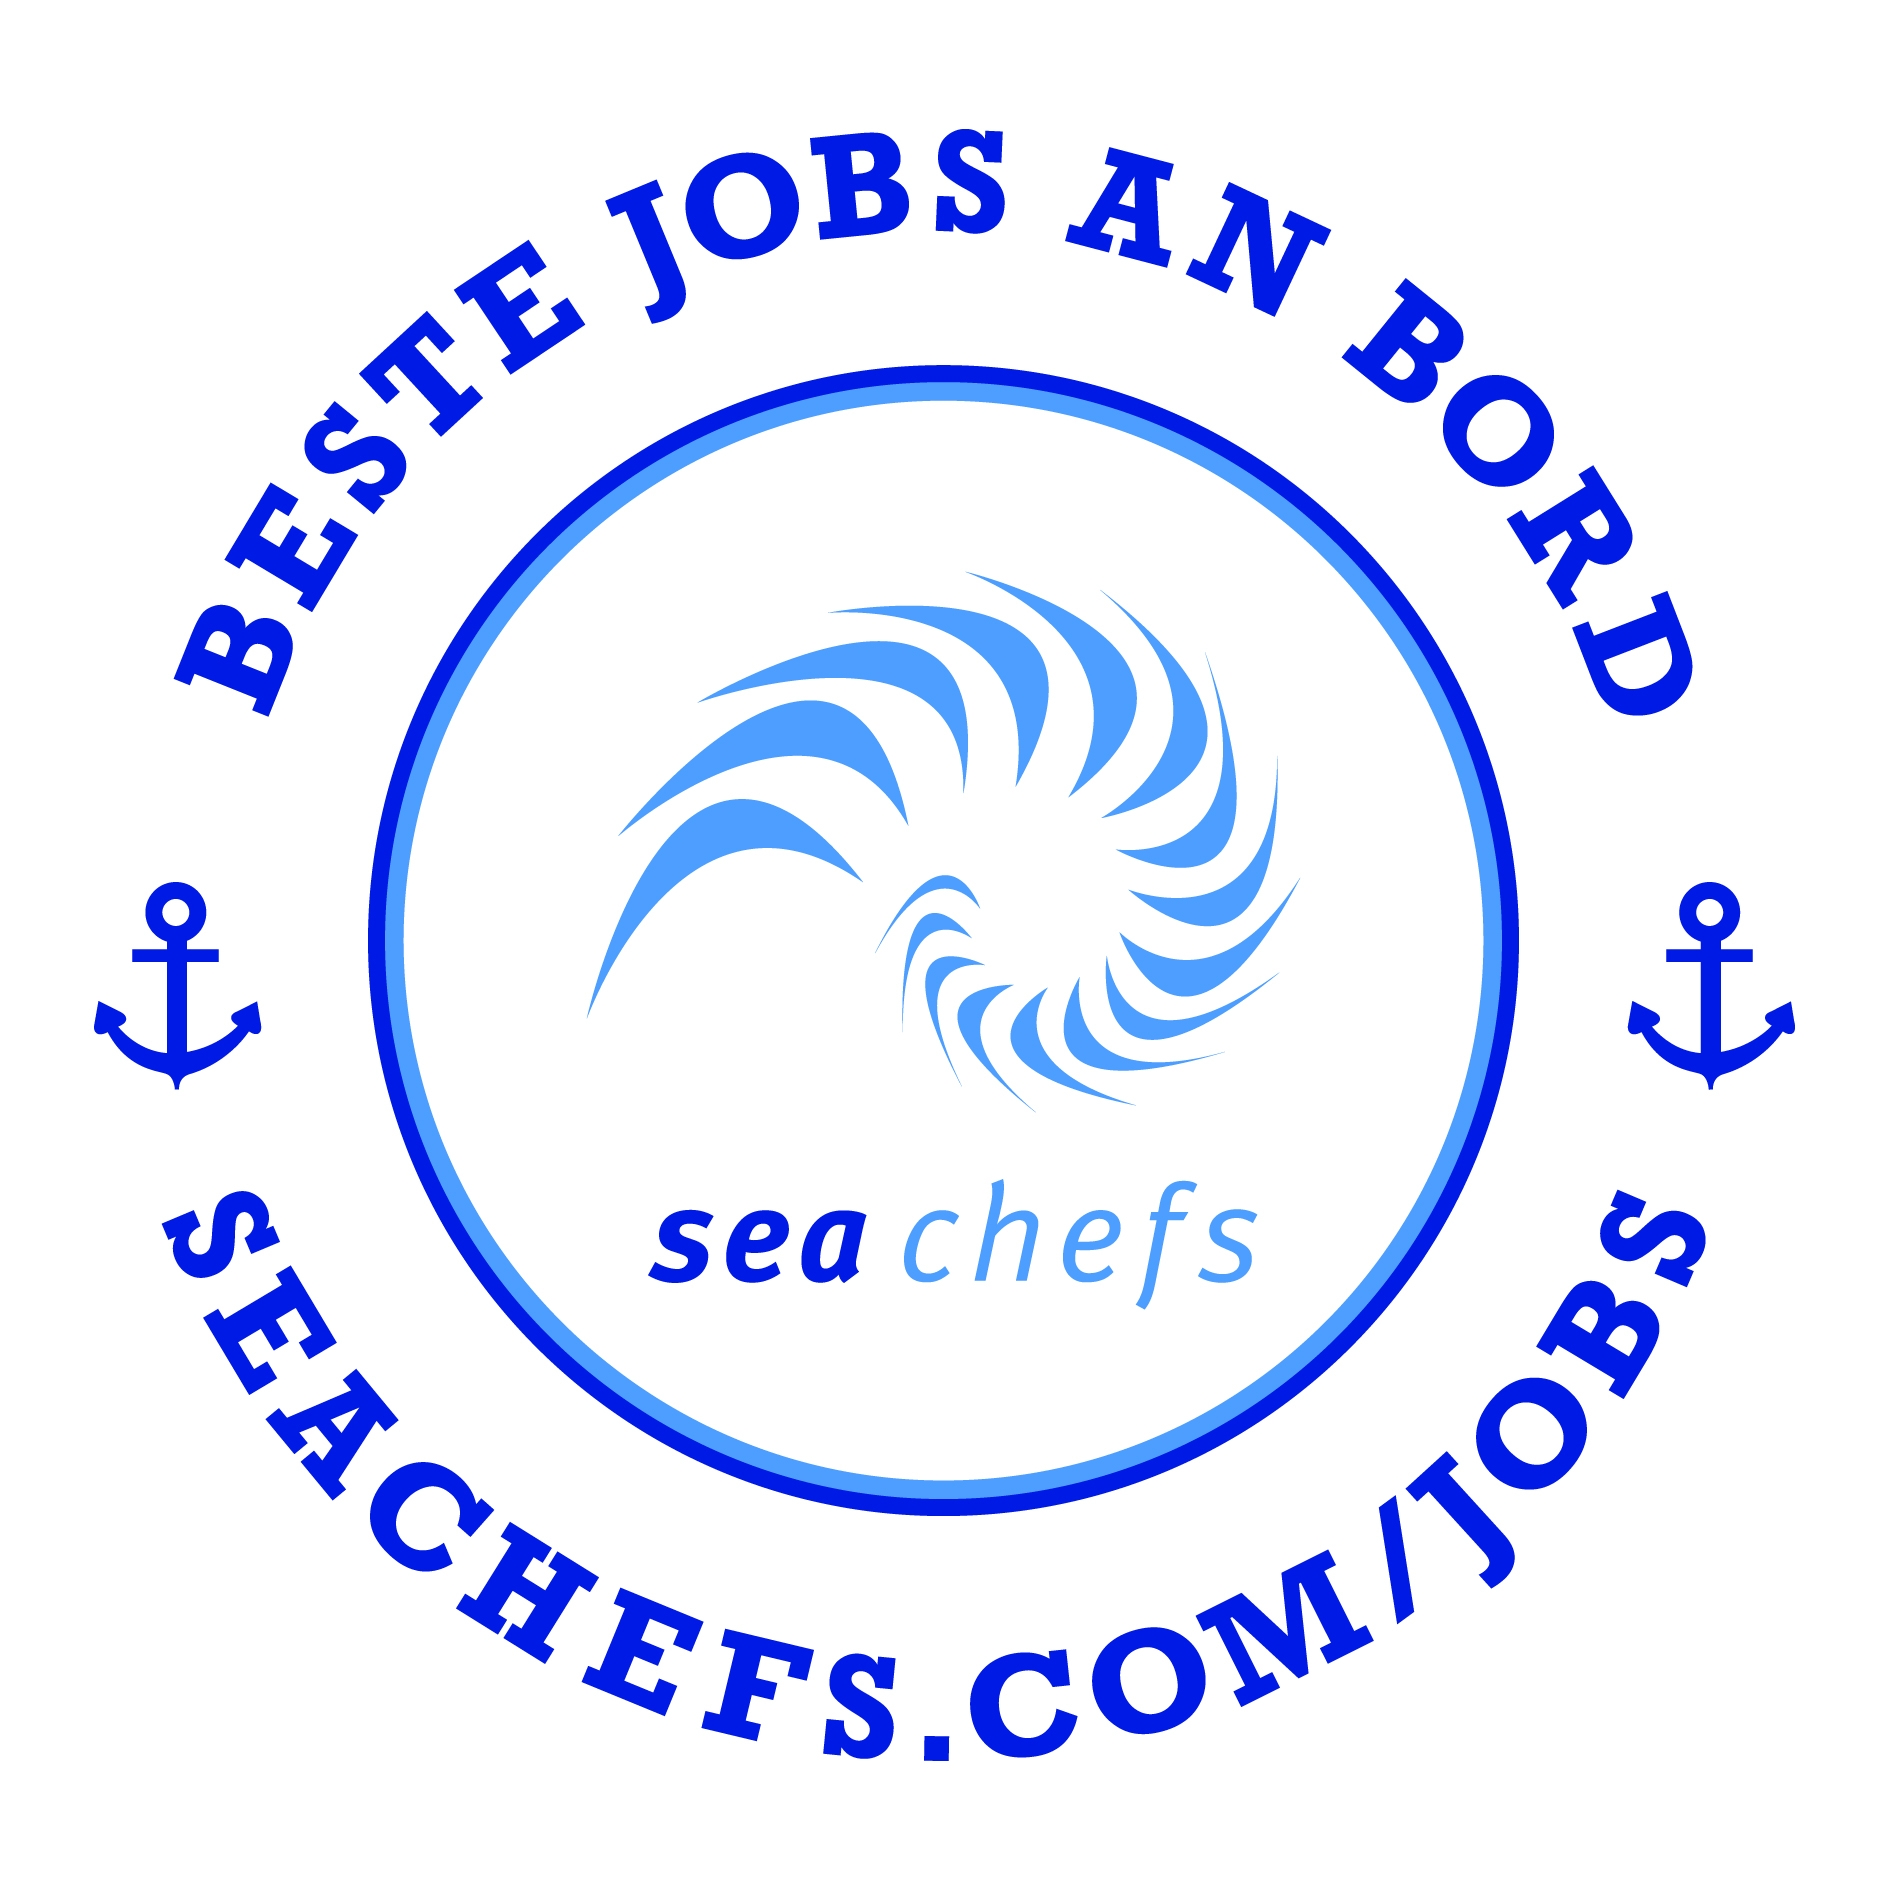 sea chefs Human Resources GmbH